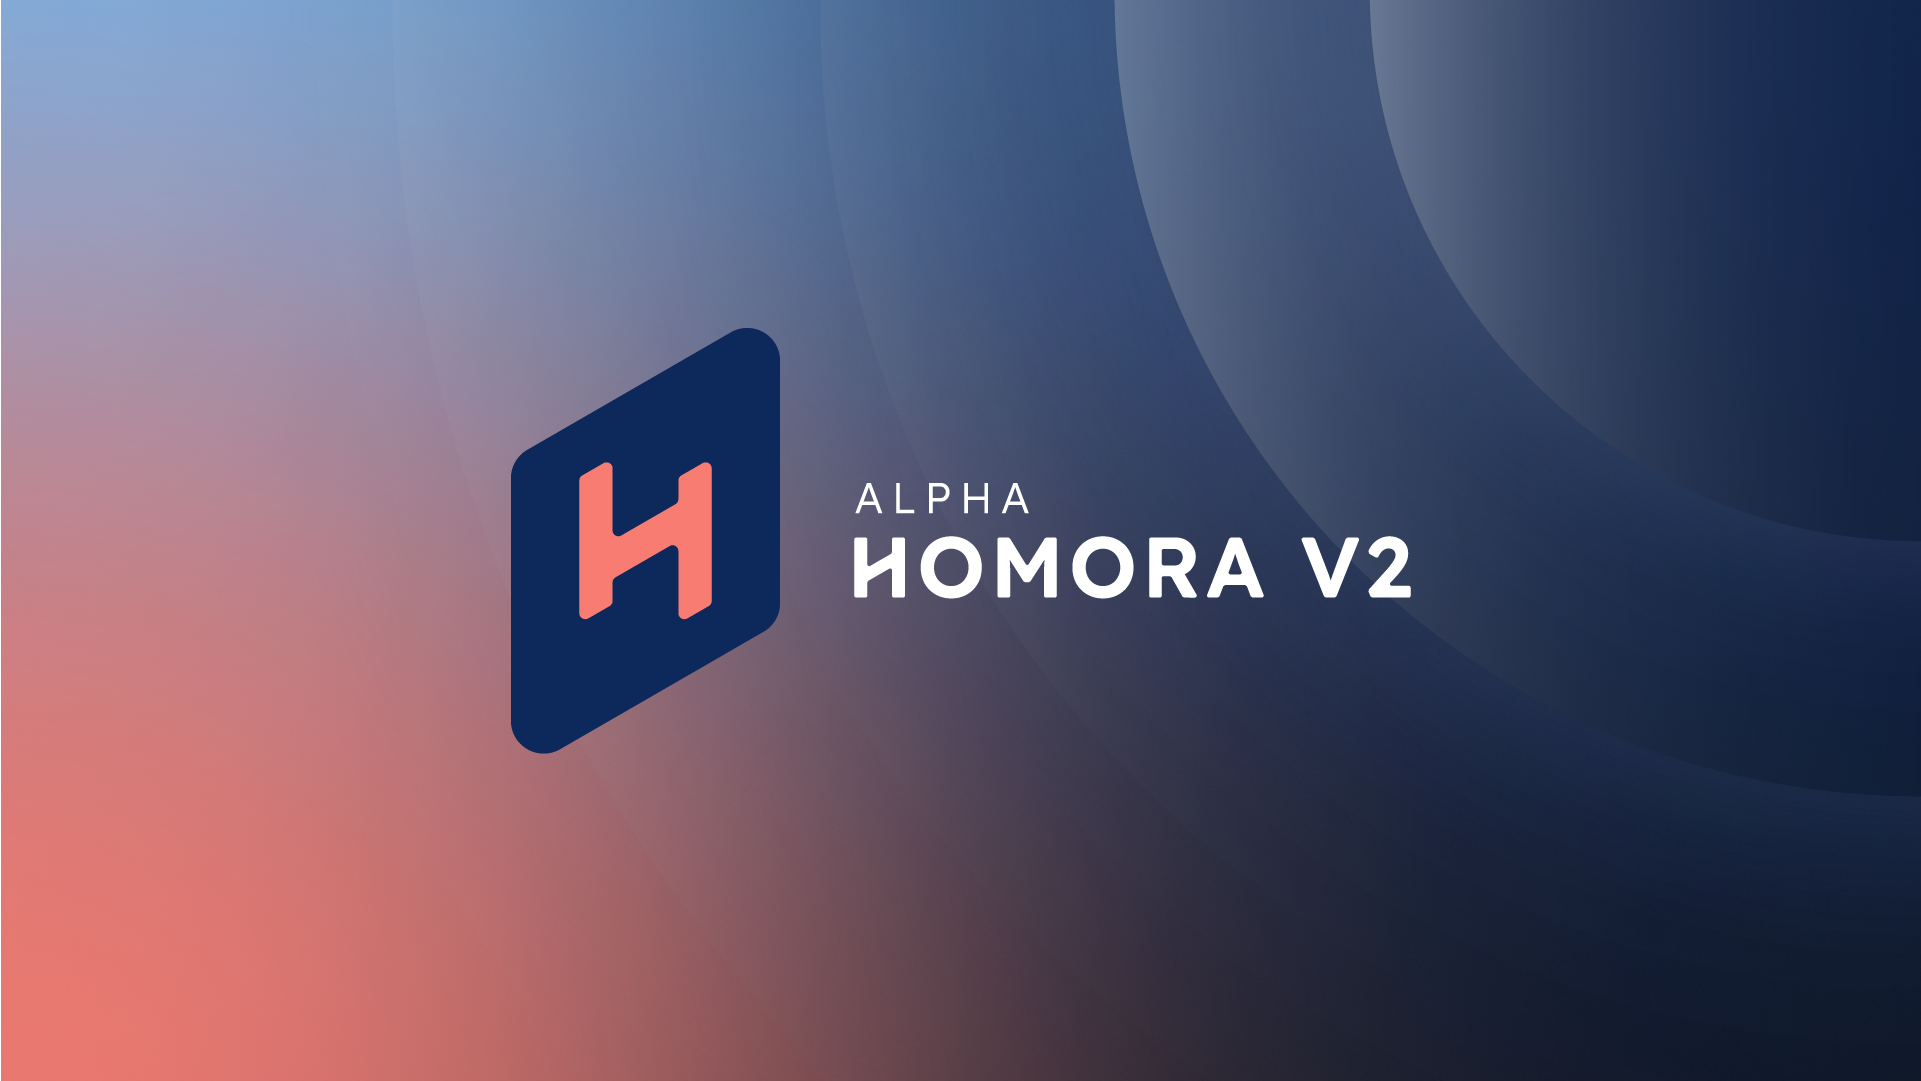 Co to jest Homora V2?